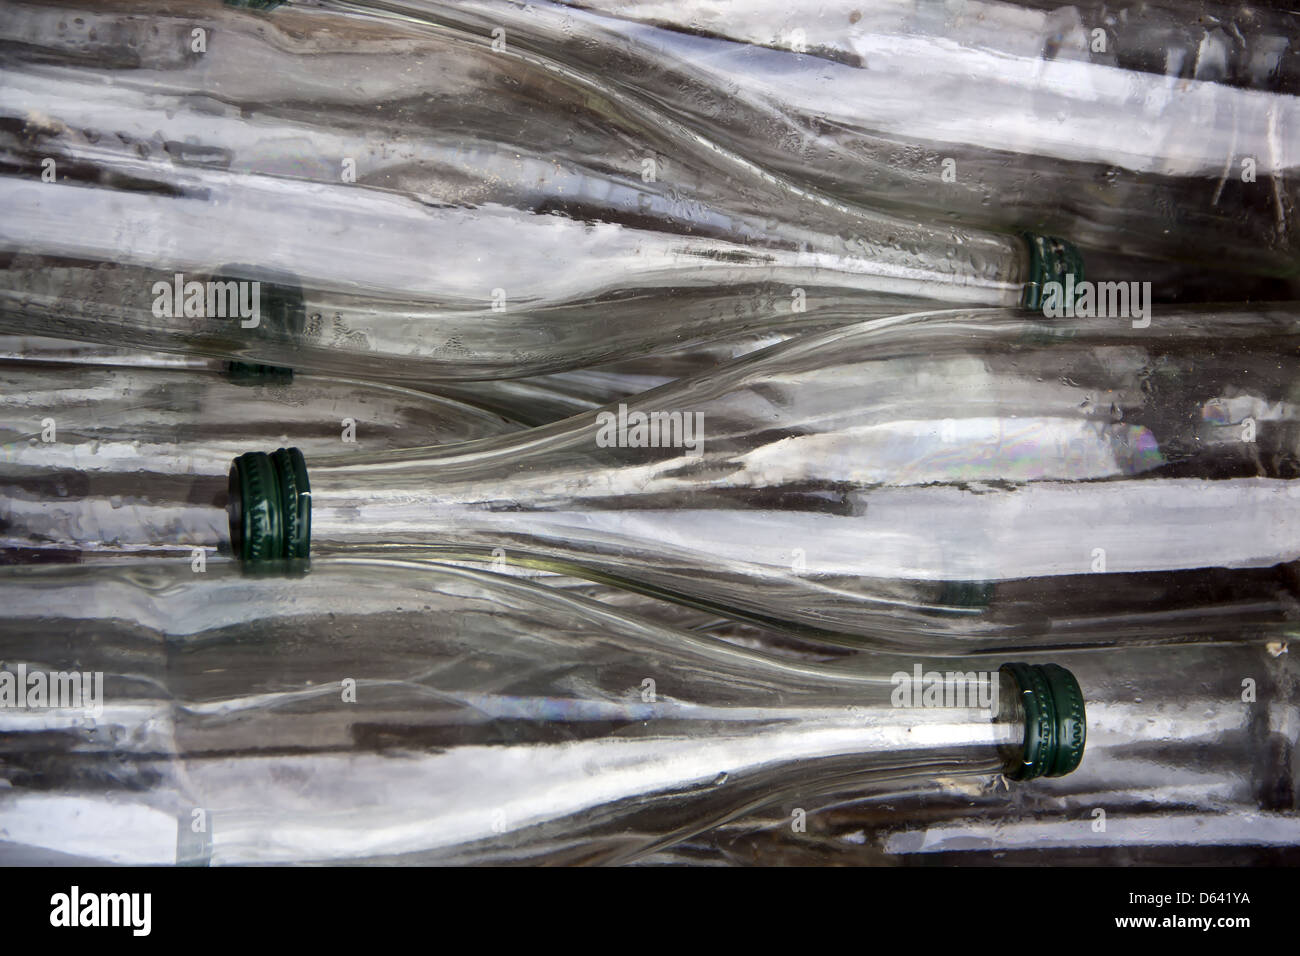 empty bottles Stock Photo